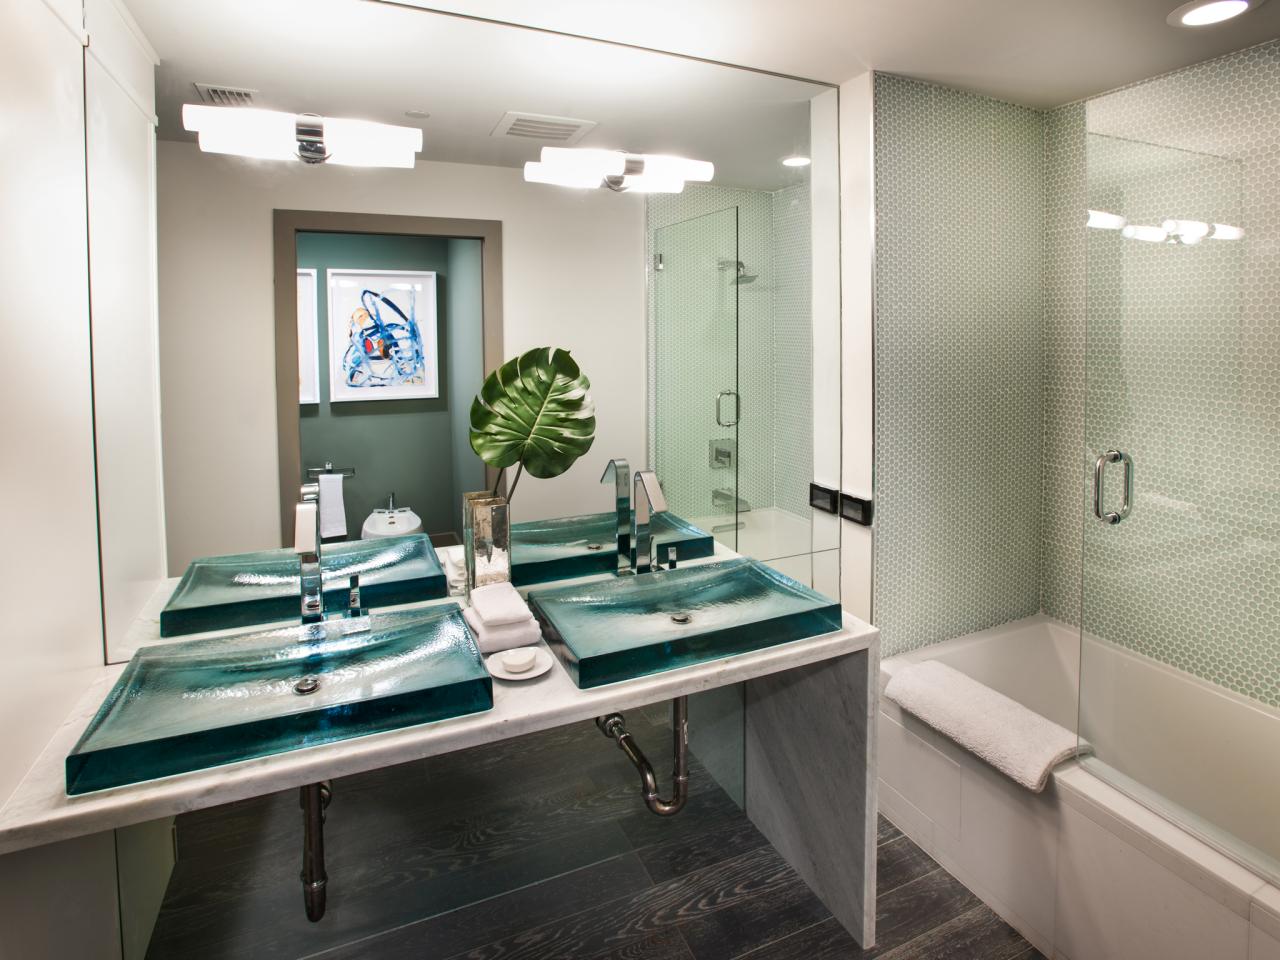 Tropical Bathroom Decor Pictures, Ideas & Tips From HGTV   HGTV